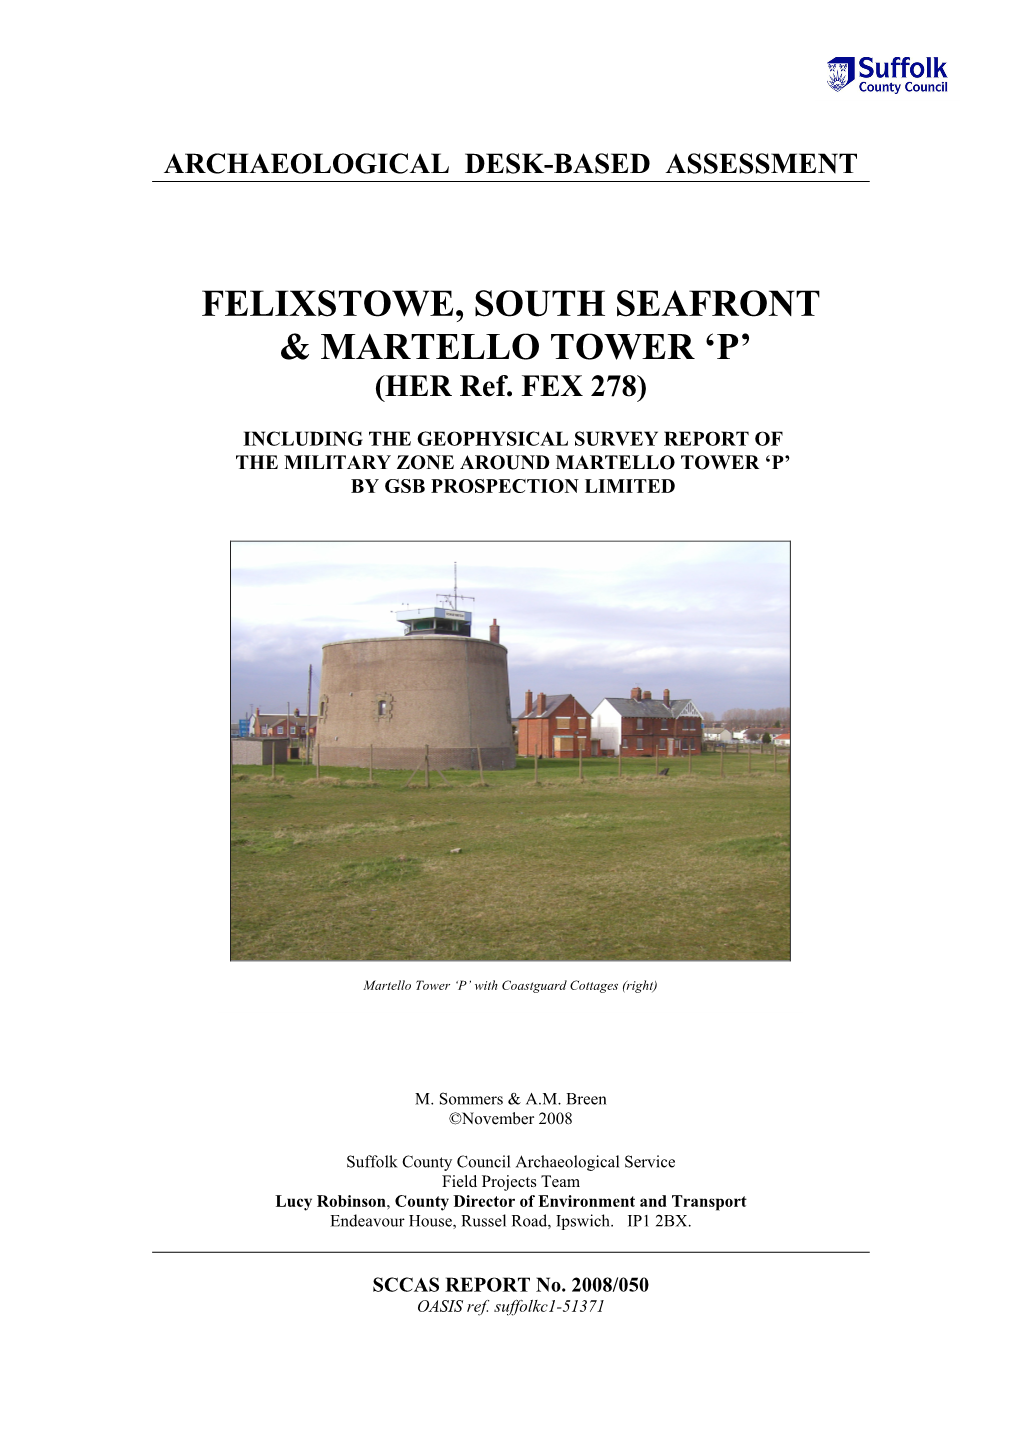 Felixstowe, South Seafront & Martello Tower